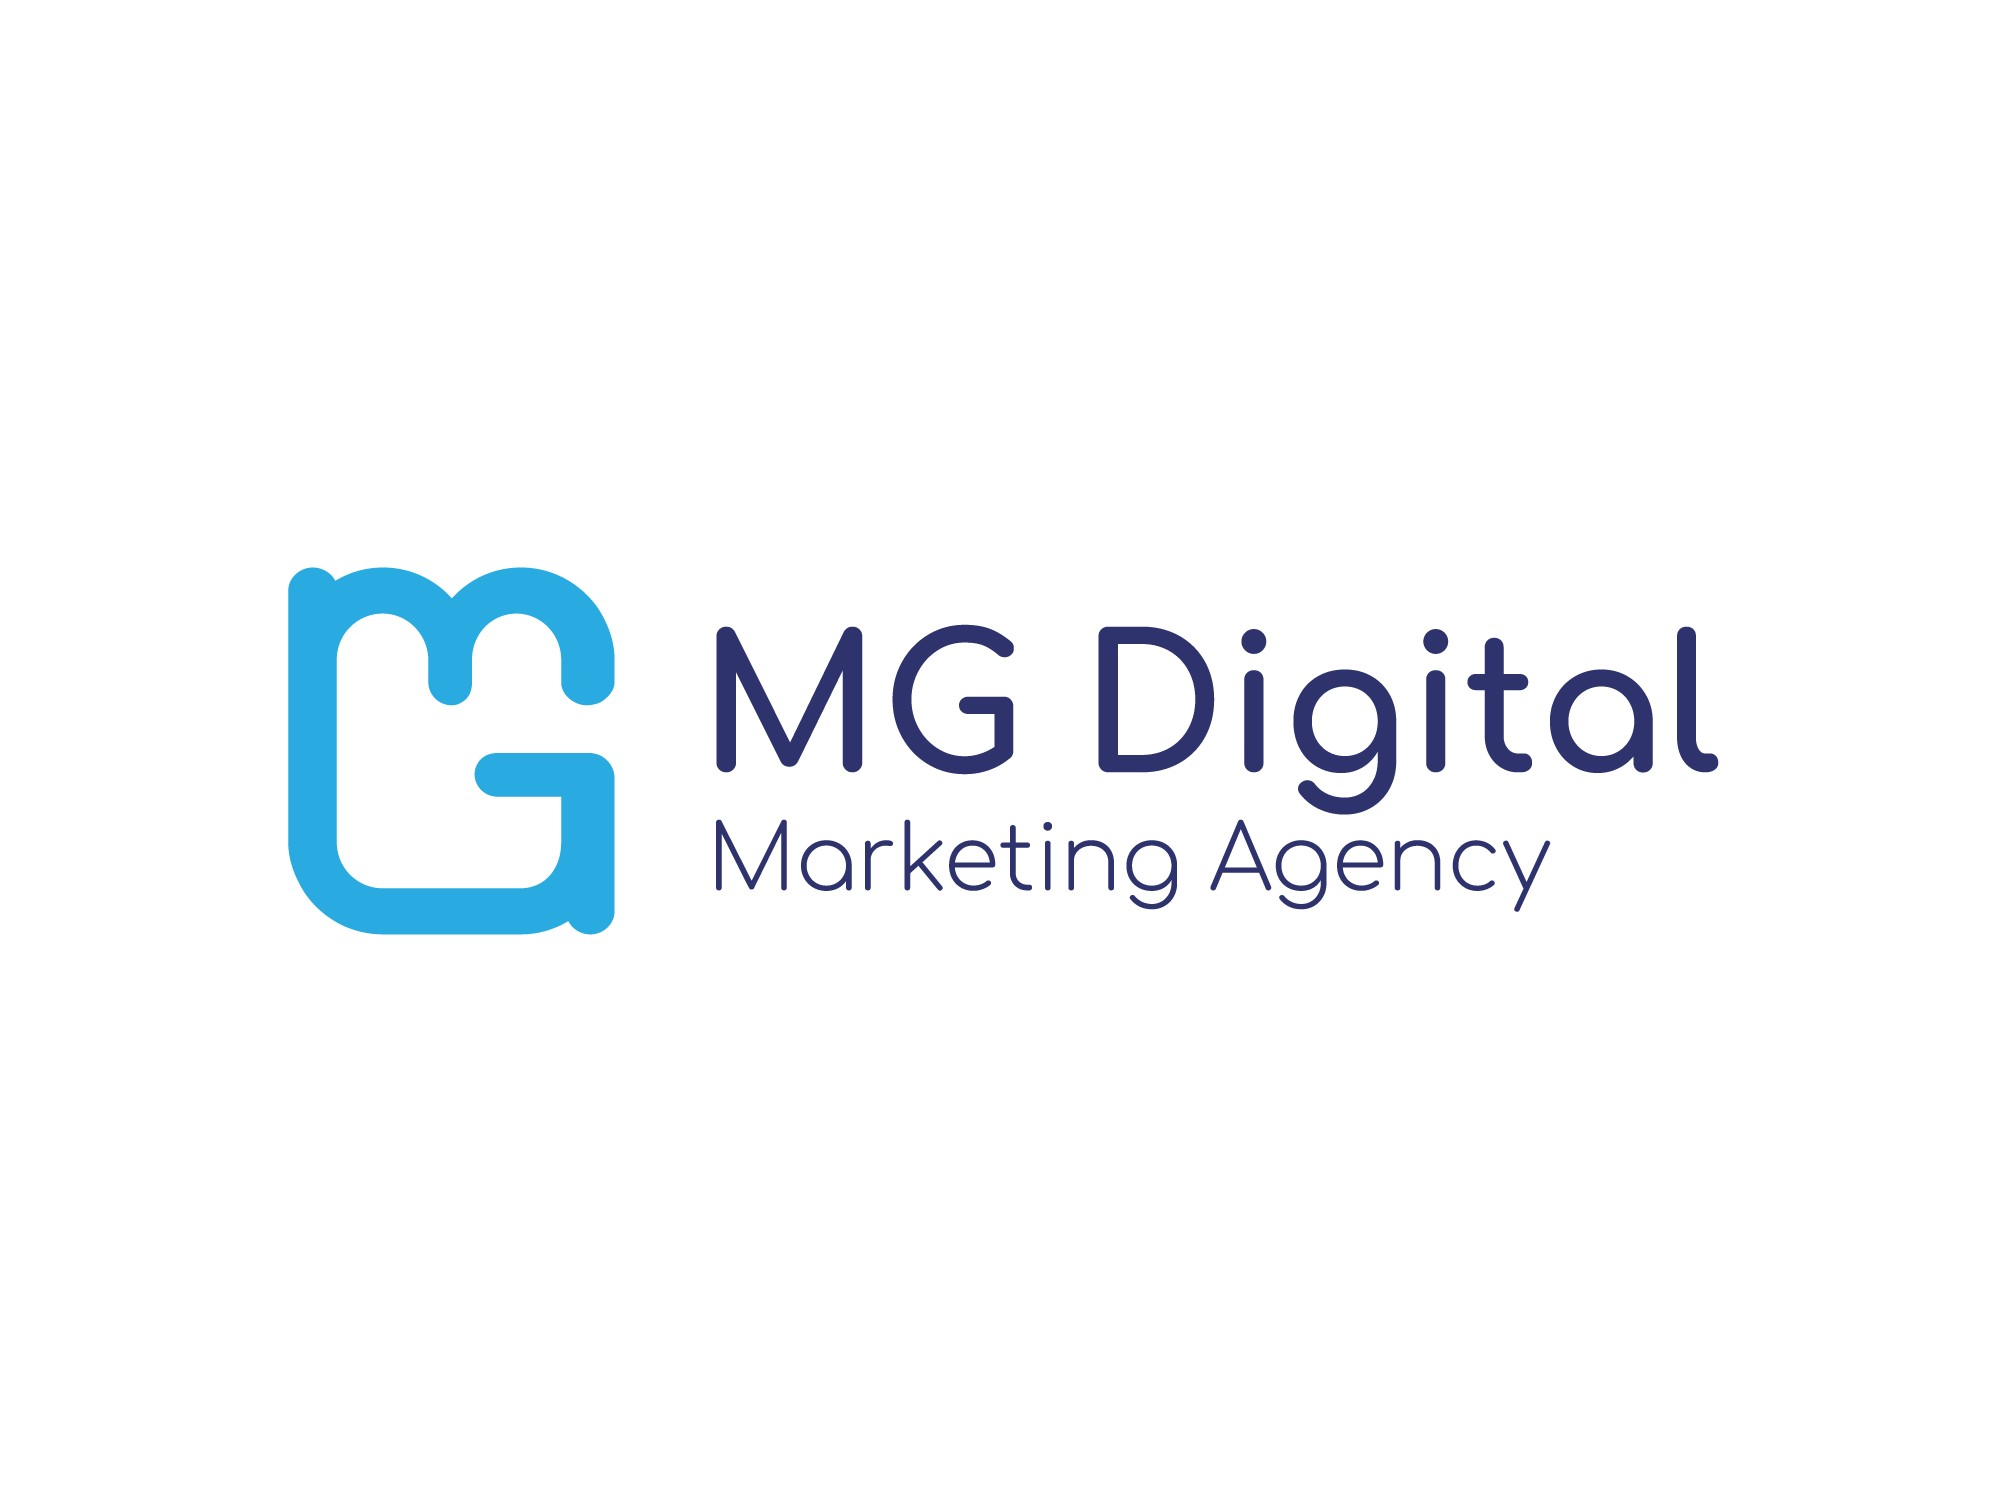 Top Digital Marketing Agency In Egypt